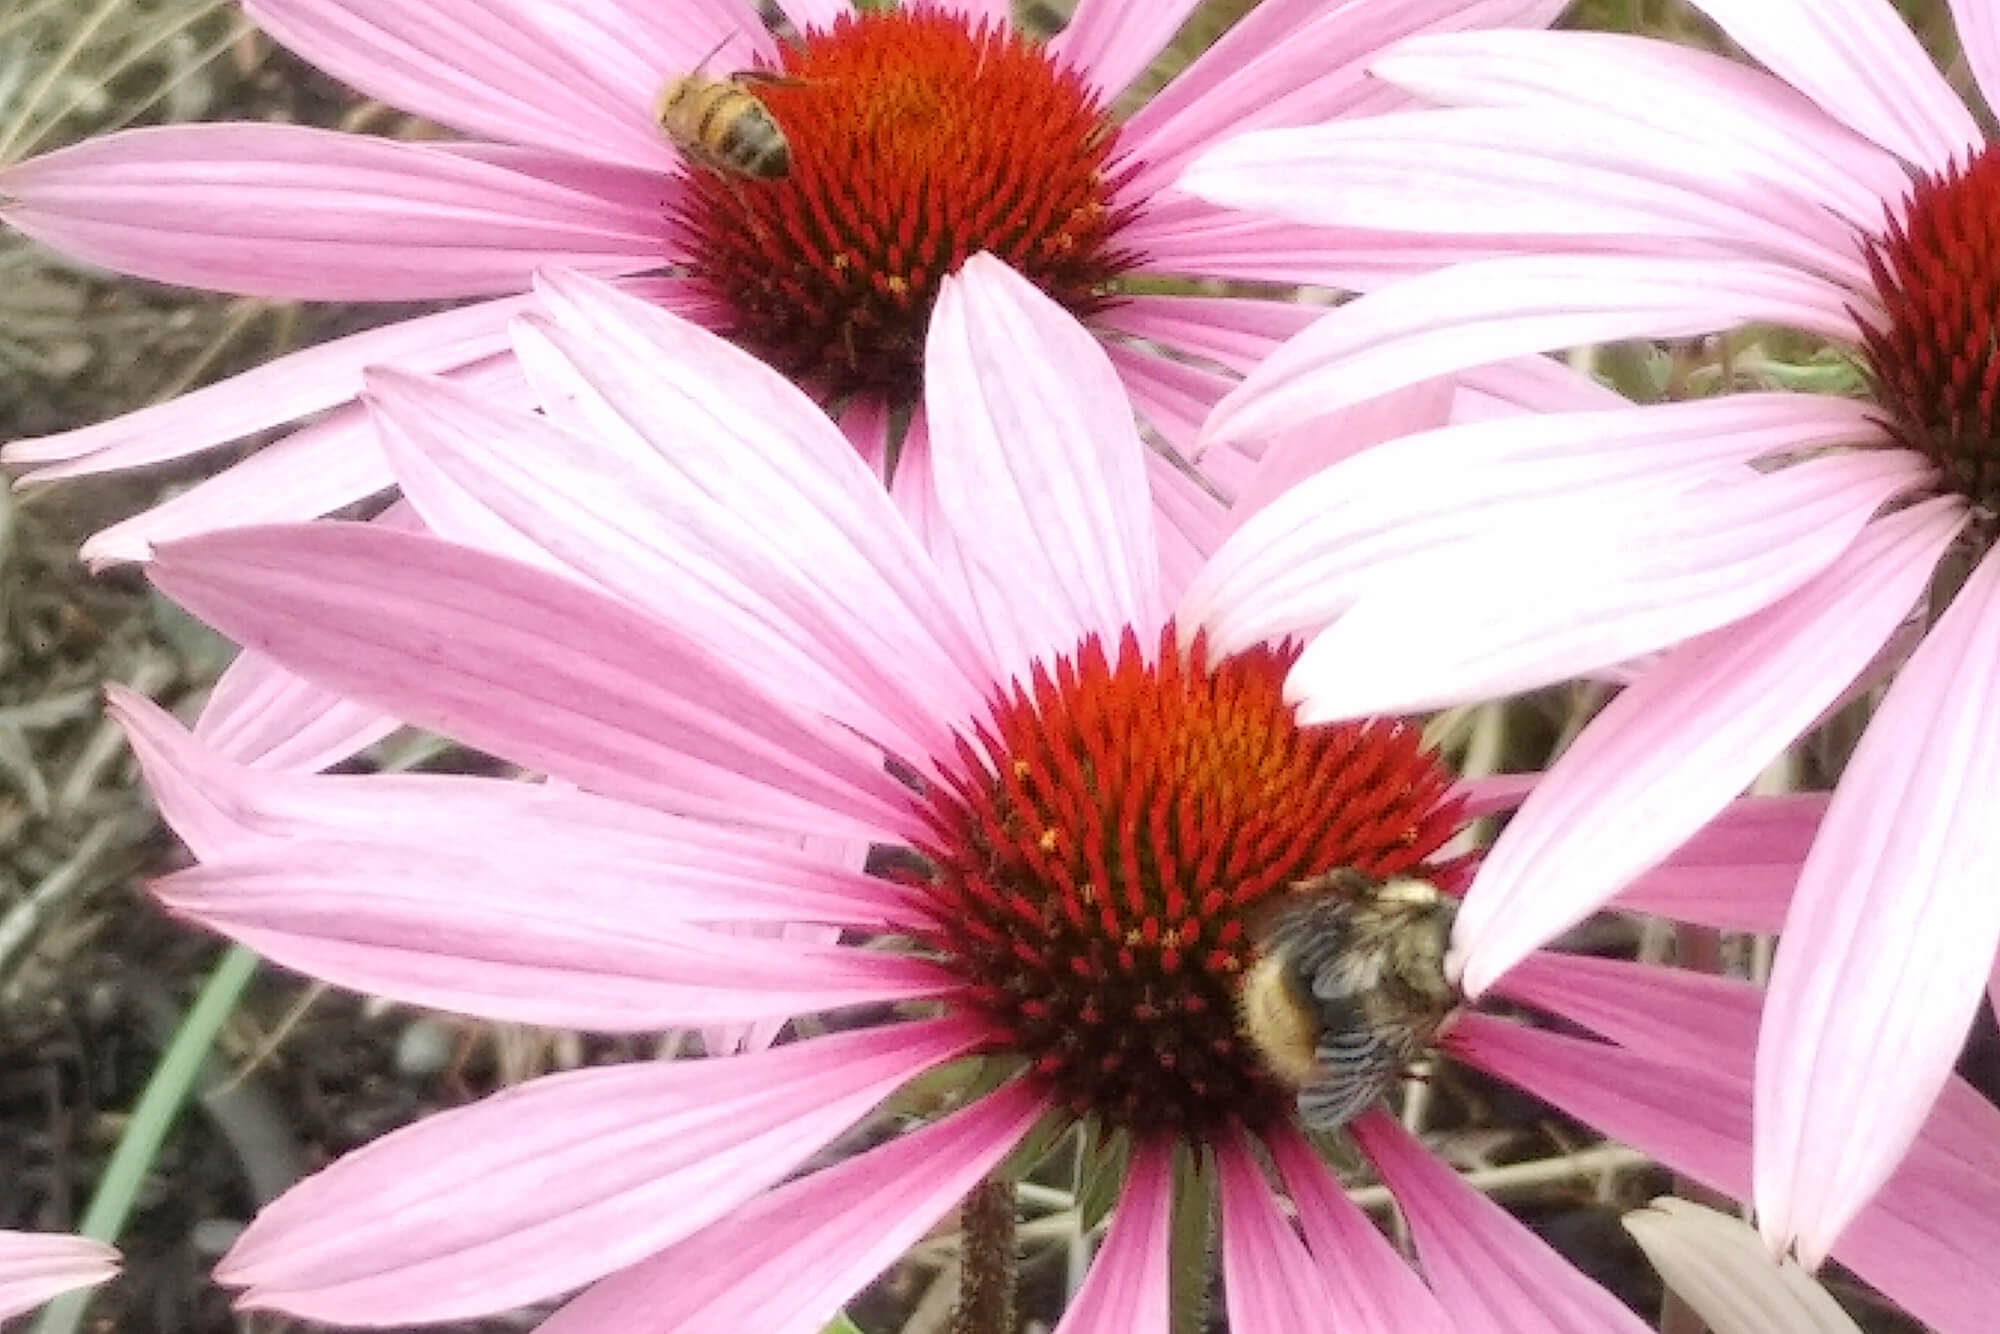 bees on a daisy